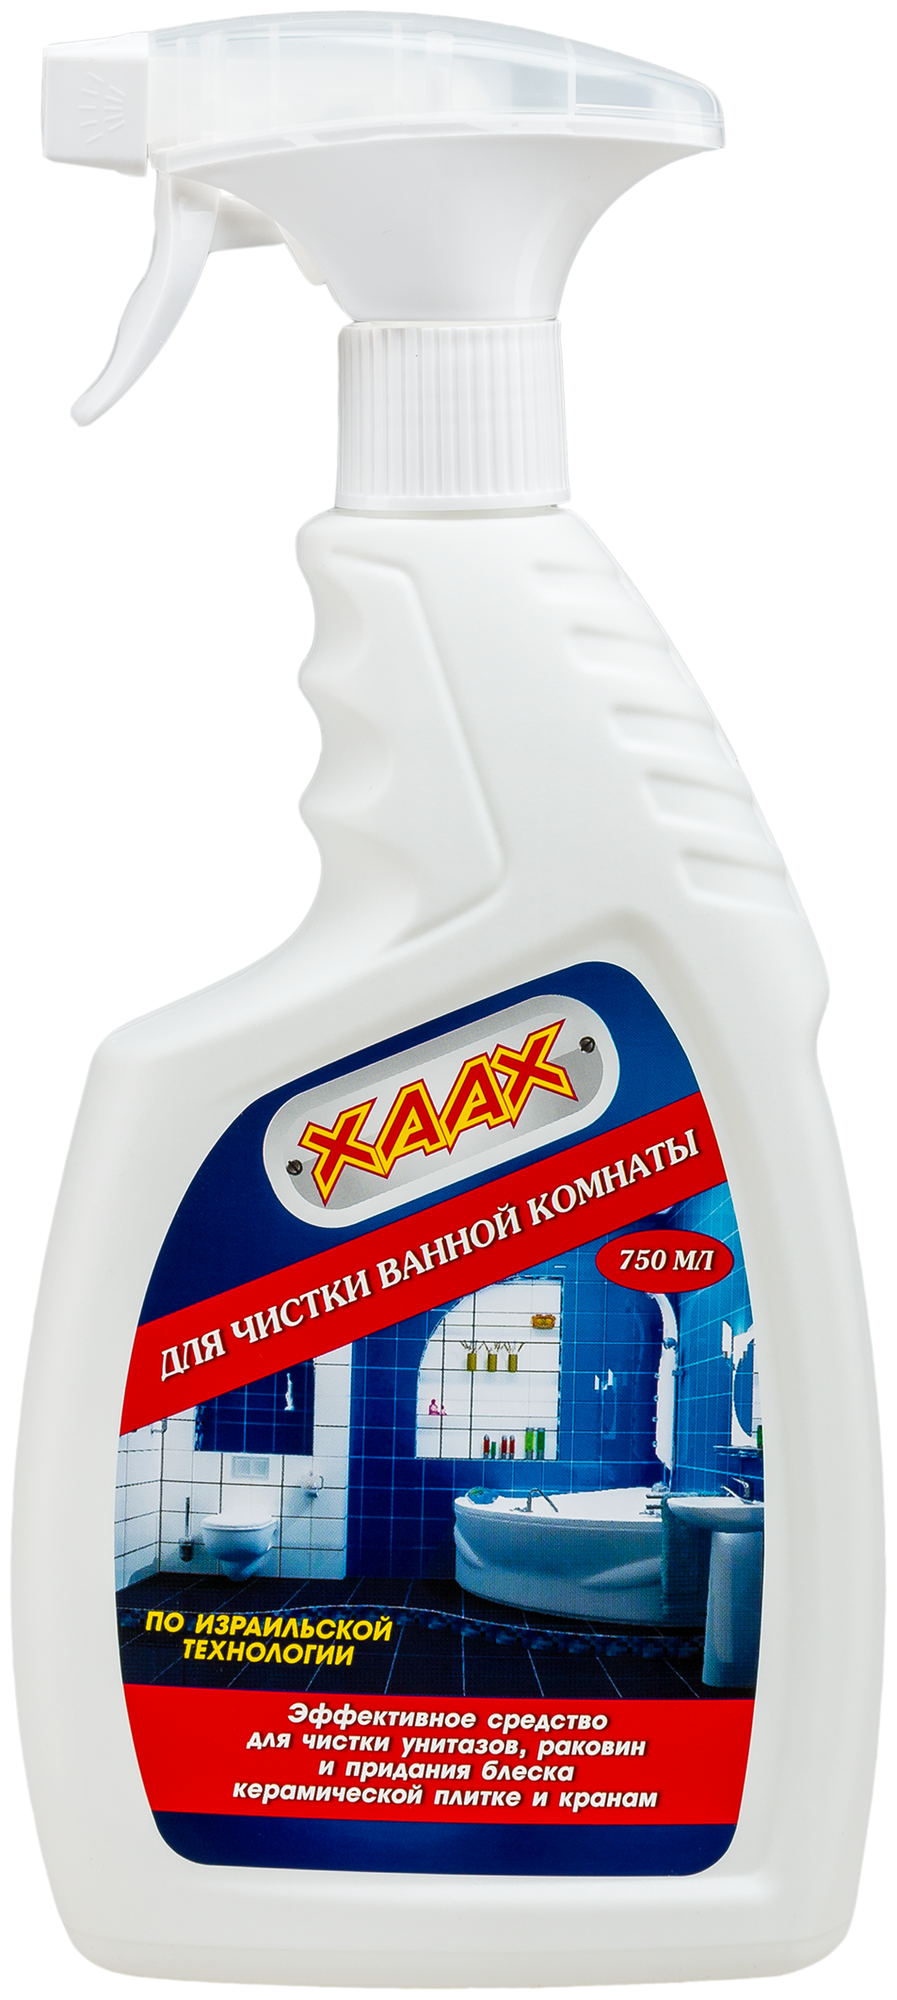 Спрей для чистки ванной комнаты XAAX